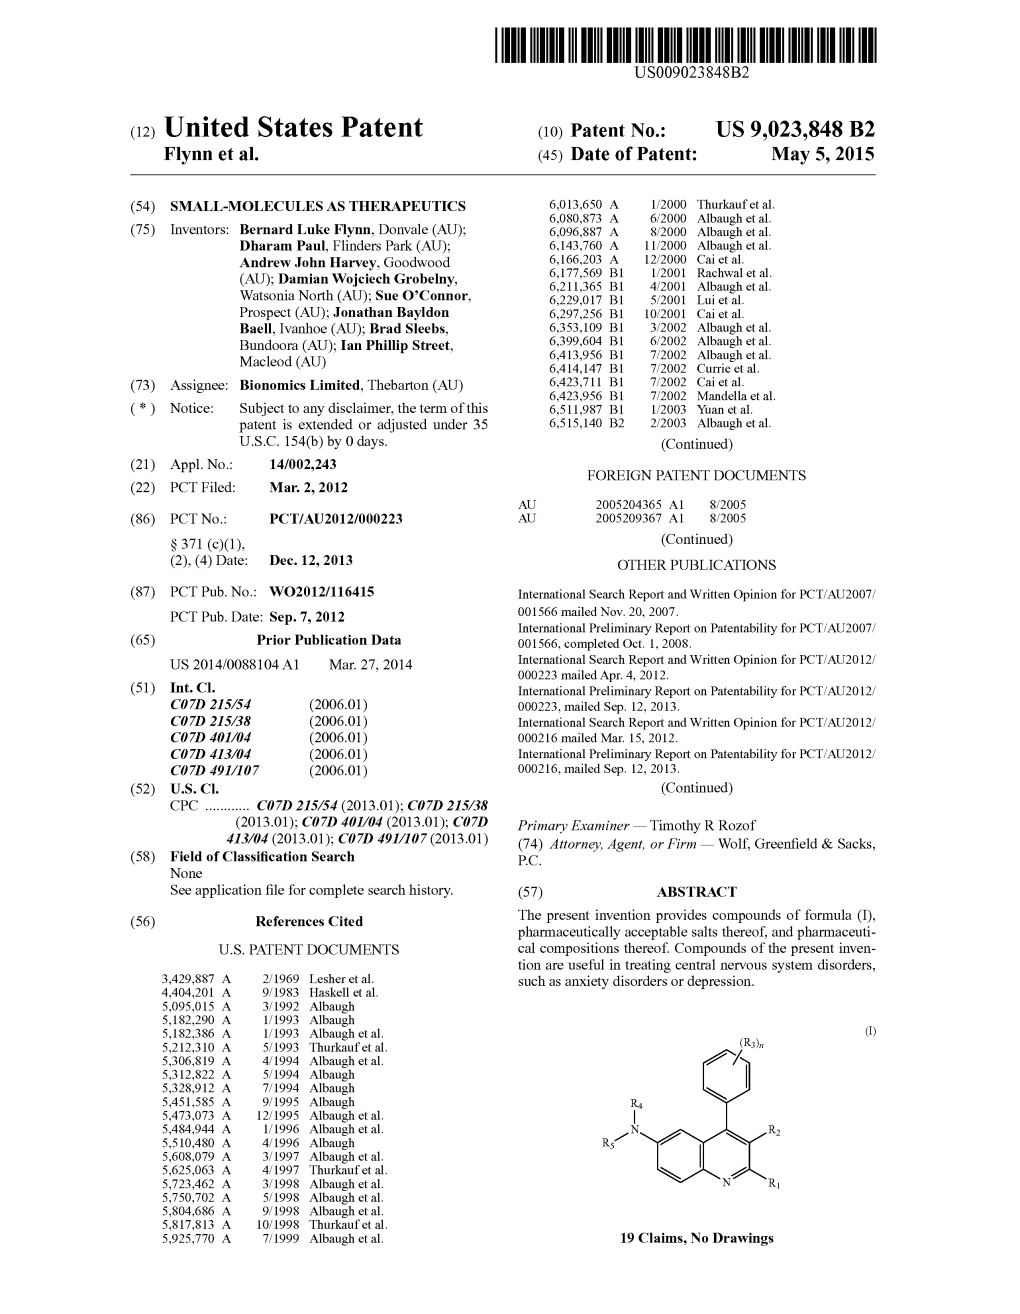 (12) United States Patent (10) Patent No.: US 9,023,848 B2 Flynn Et Al